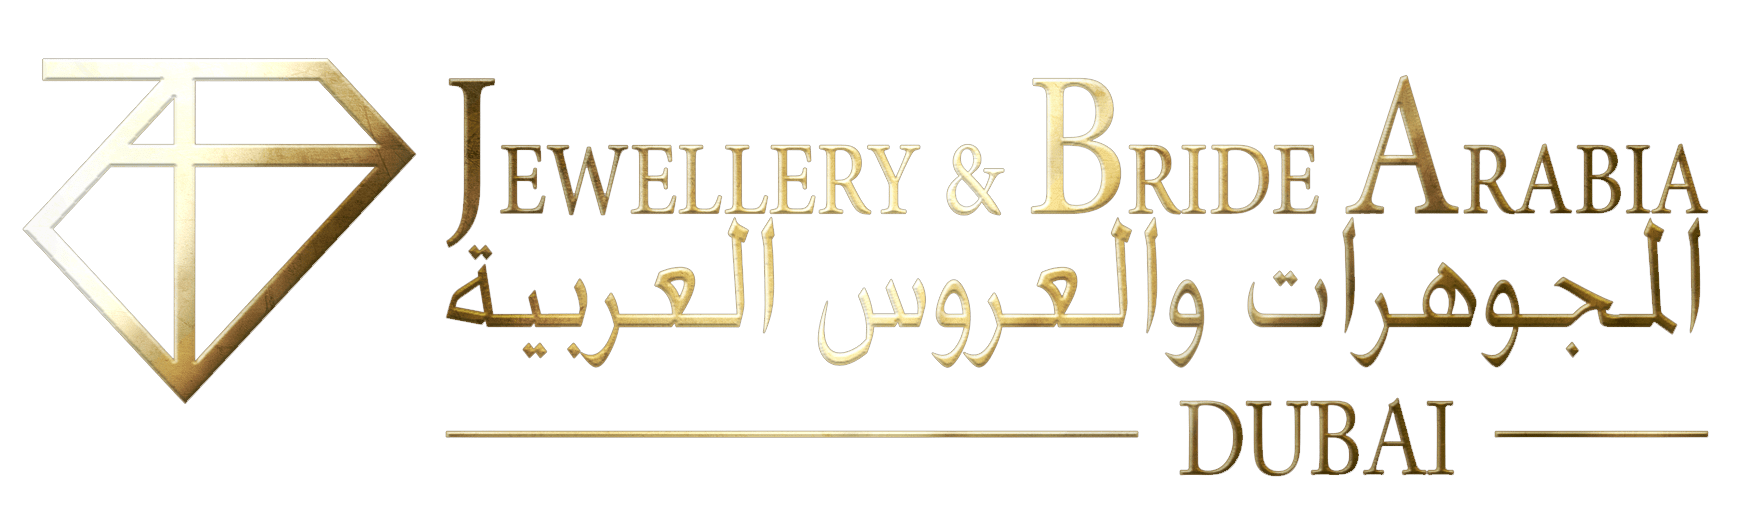 Jewellery and Bride Arabia